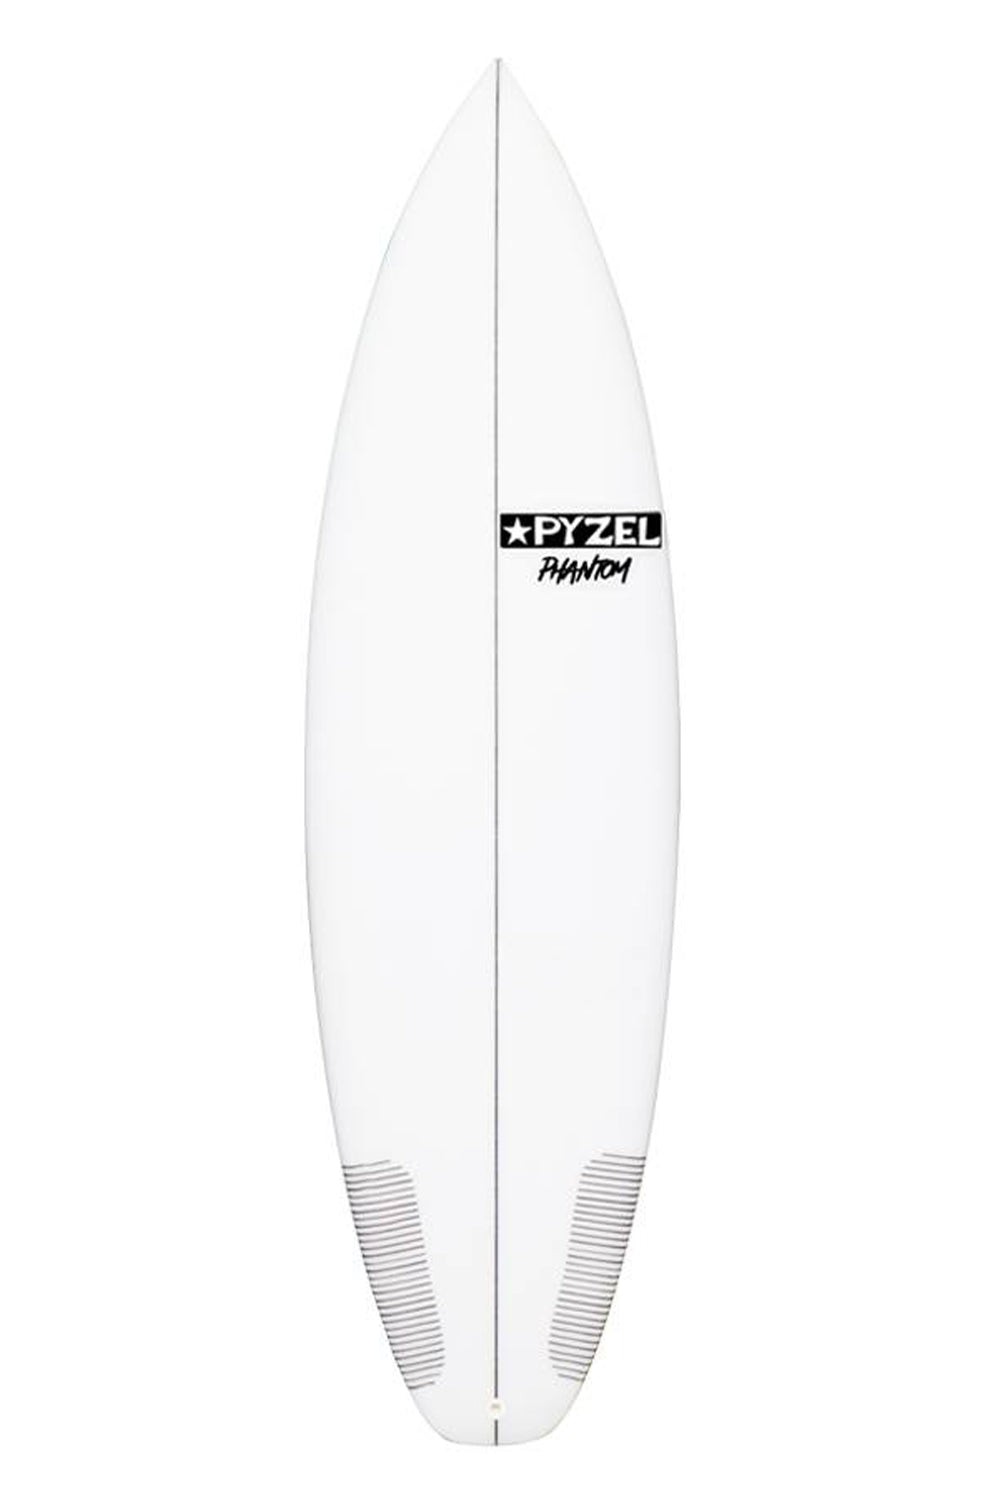 Pyzel Phantom XL Surfboard